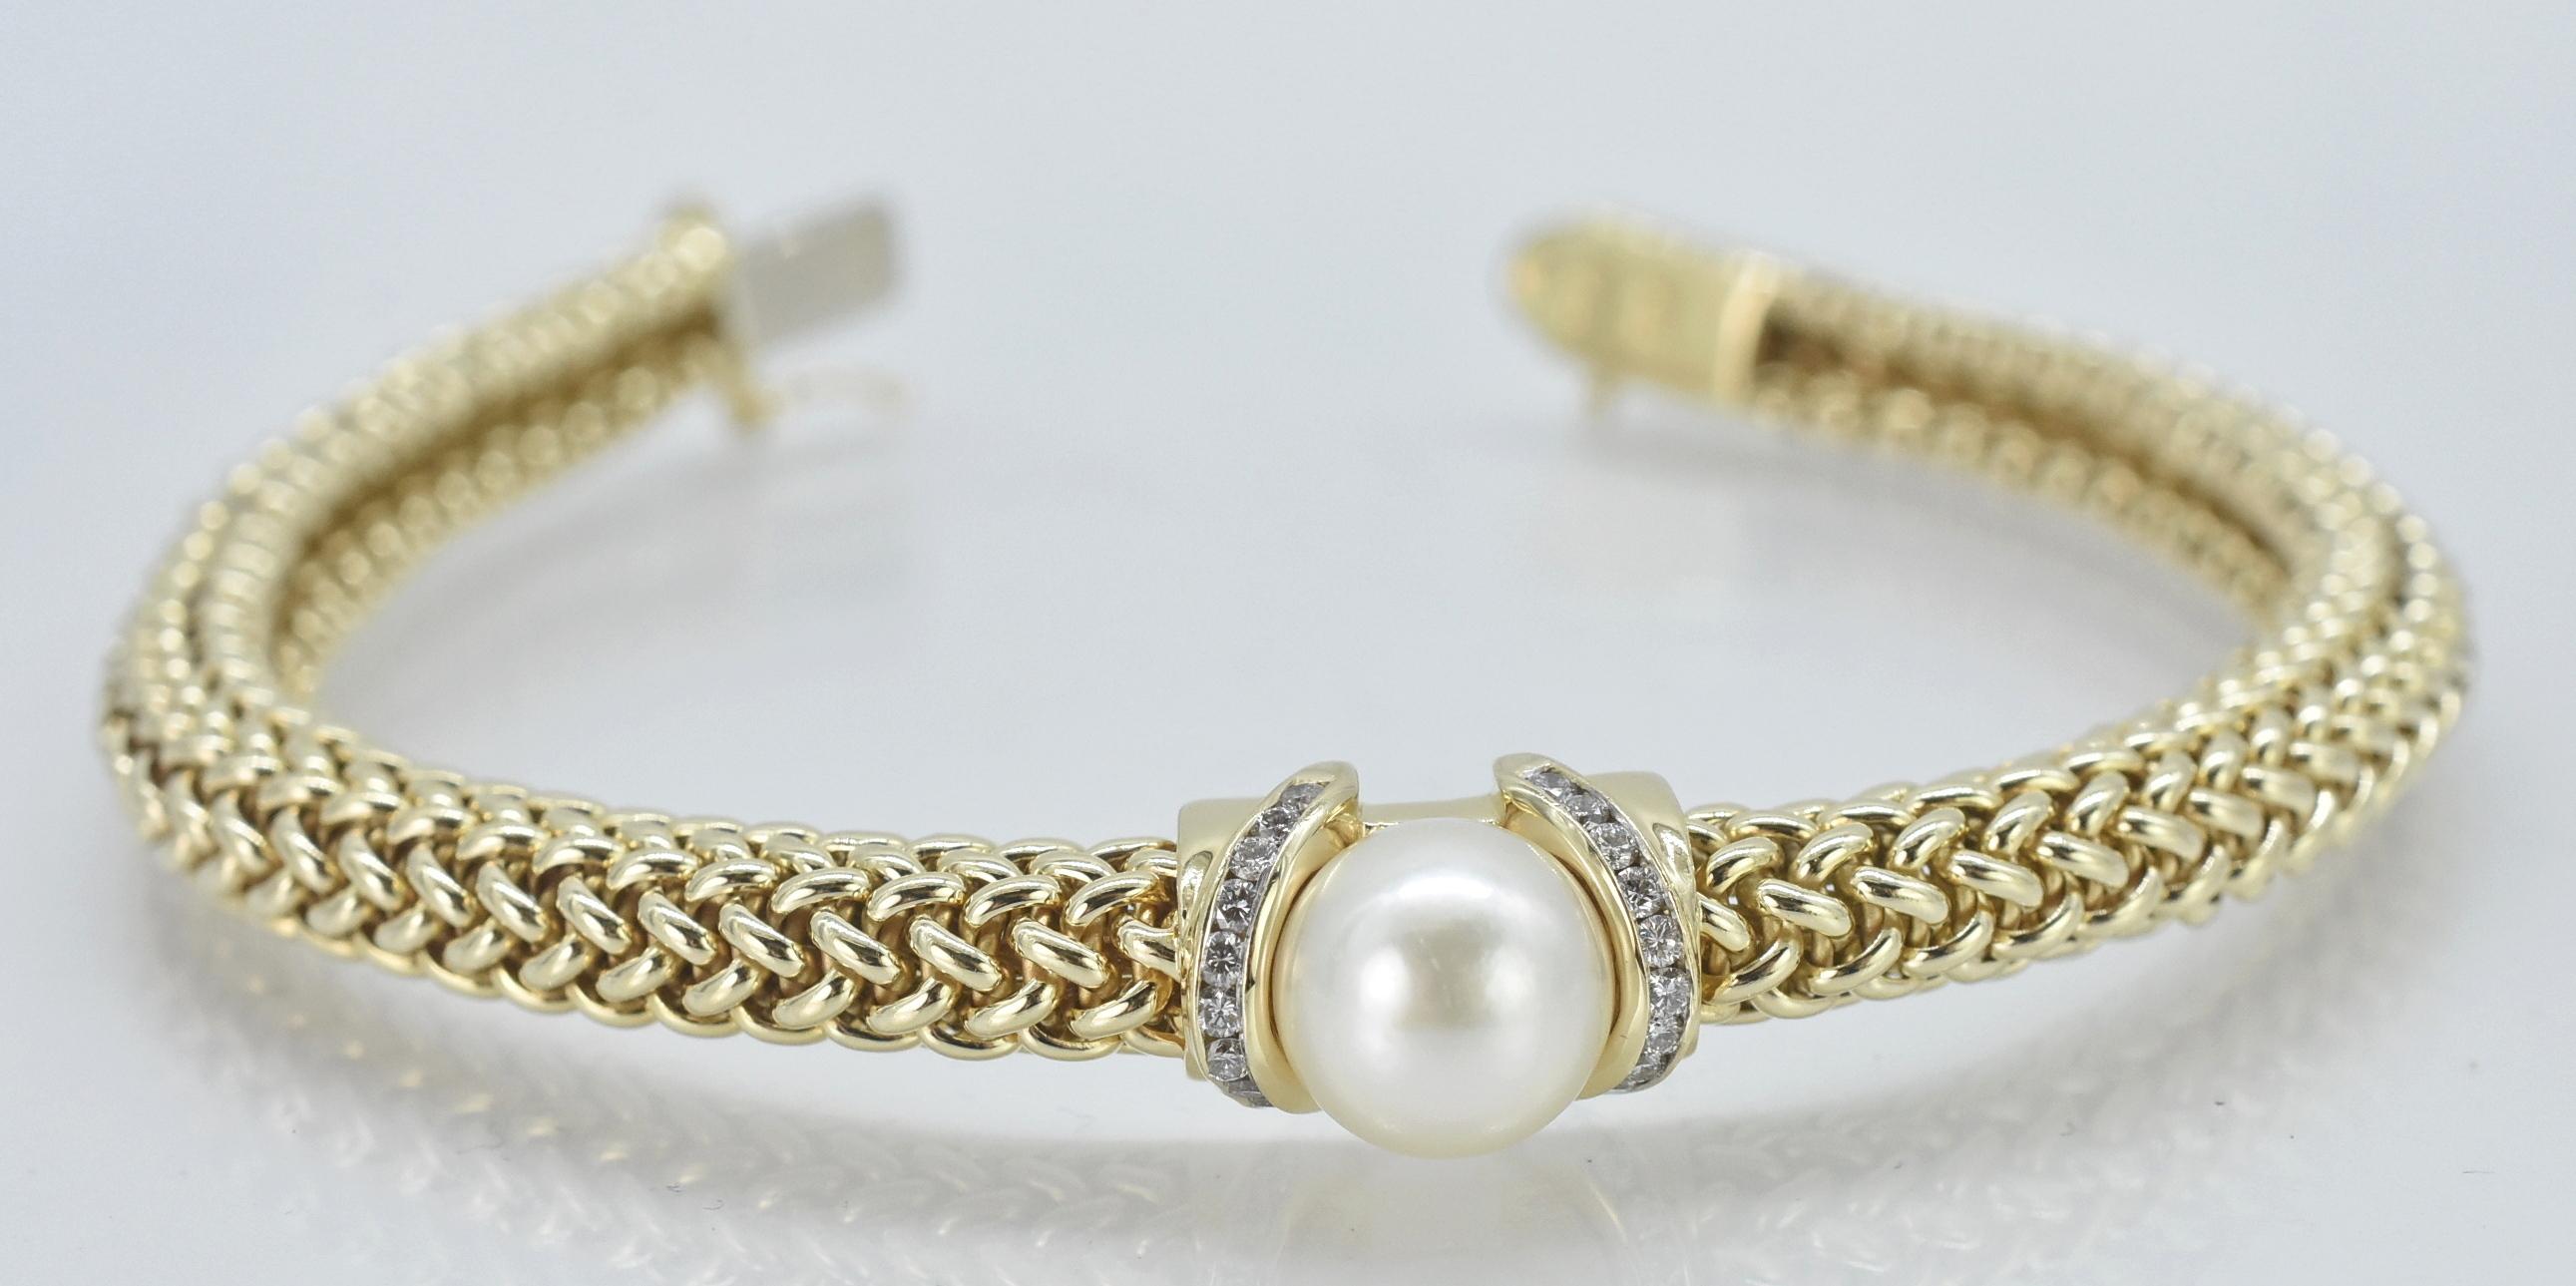 14K Rope Design Bracelet with Pearl, SKD, Scott Keating Design. Scott Keating Design, 14K yellow gold round rope design bracelet, with central pearl and .25 cttw round cut diamond accents. 7 1/4